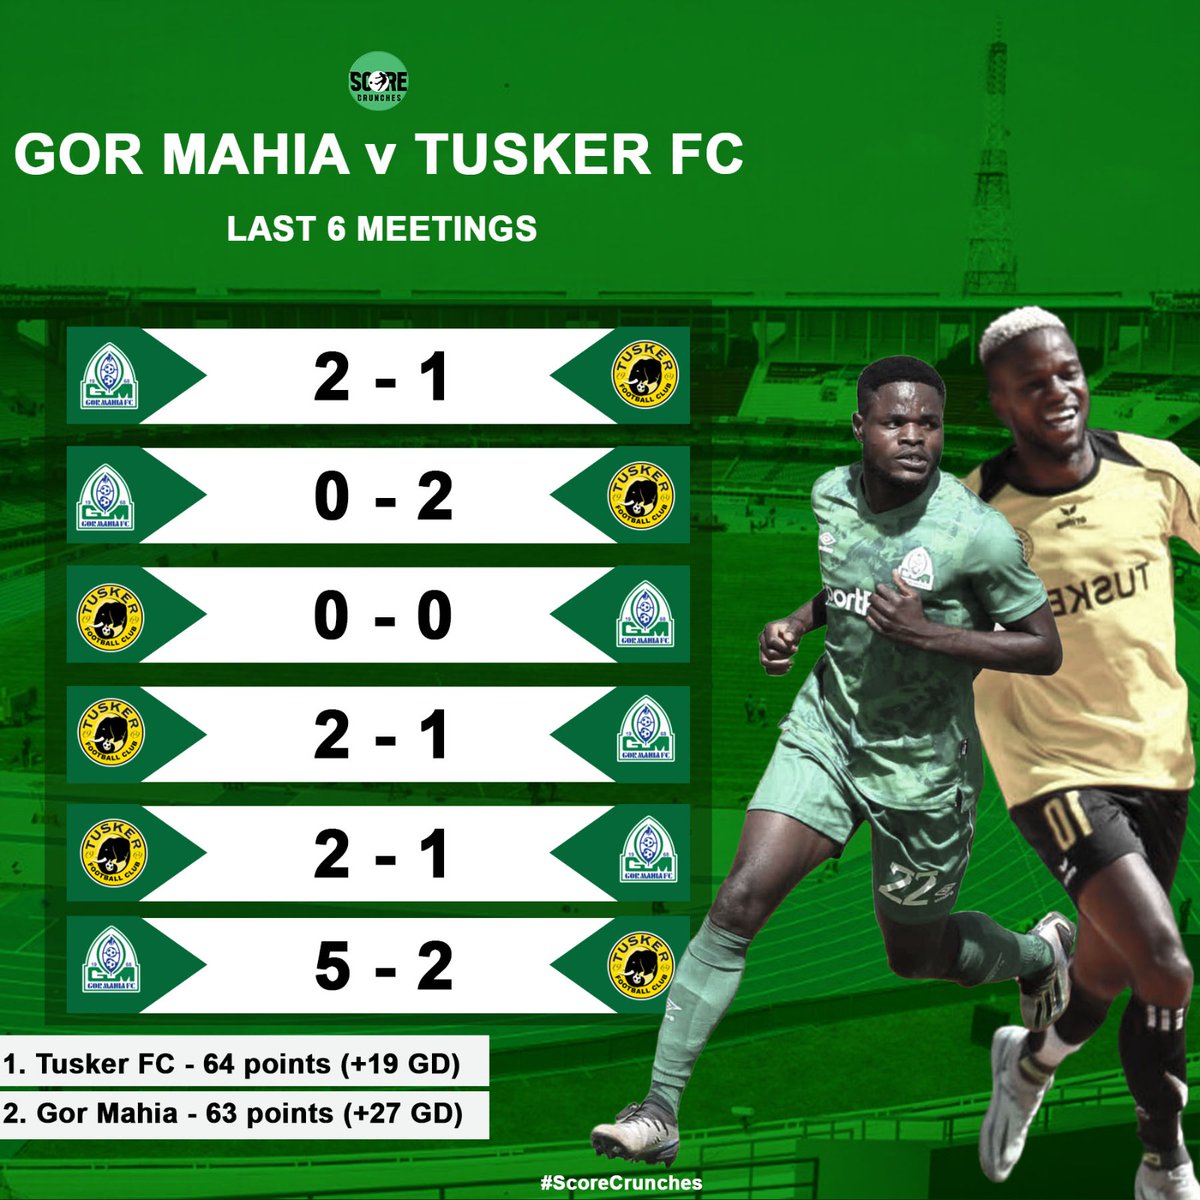 #FKFPL HEAD TO HEAD||

Previous meetings between Gor Mahia and Tusker FC  - last six. ⤵️

#ScoreCrunches